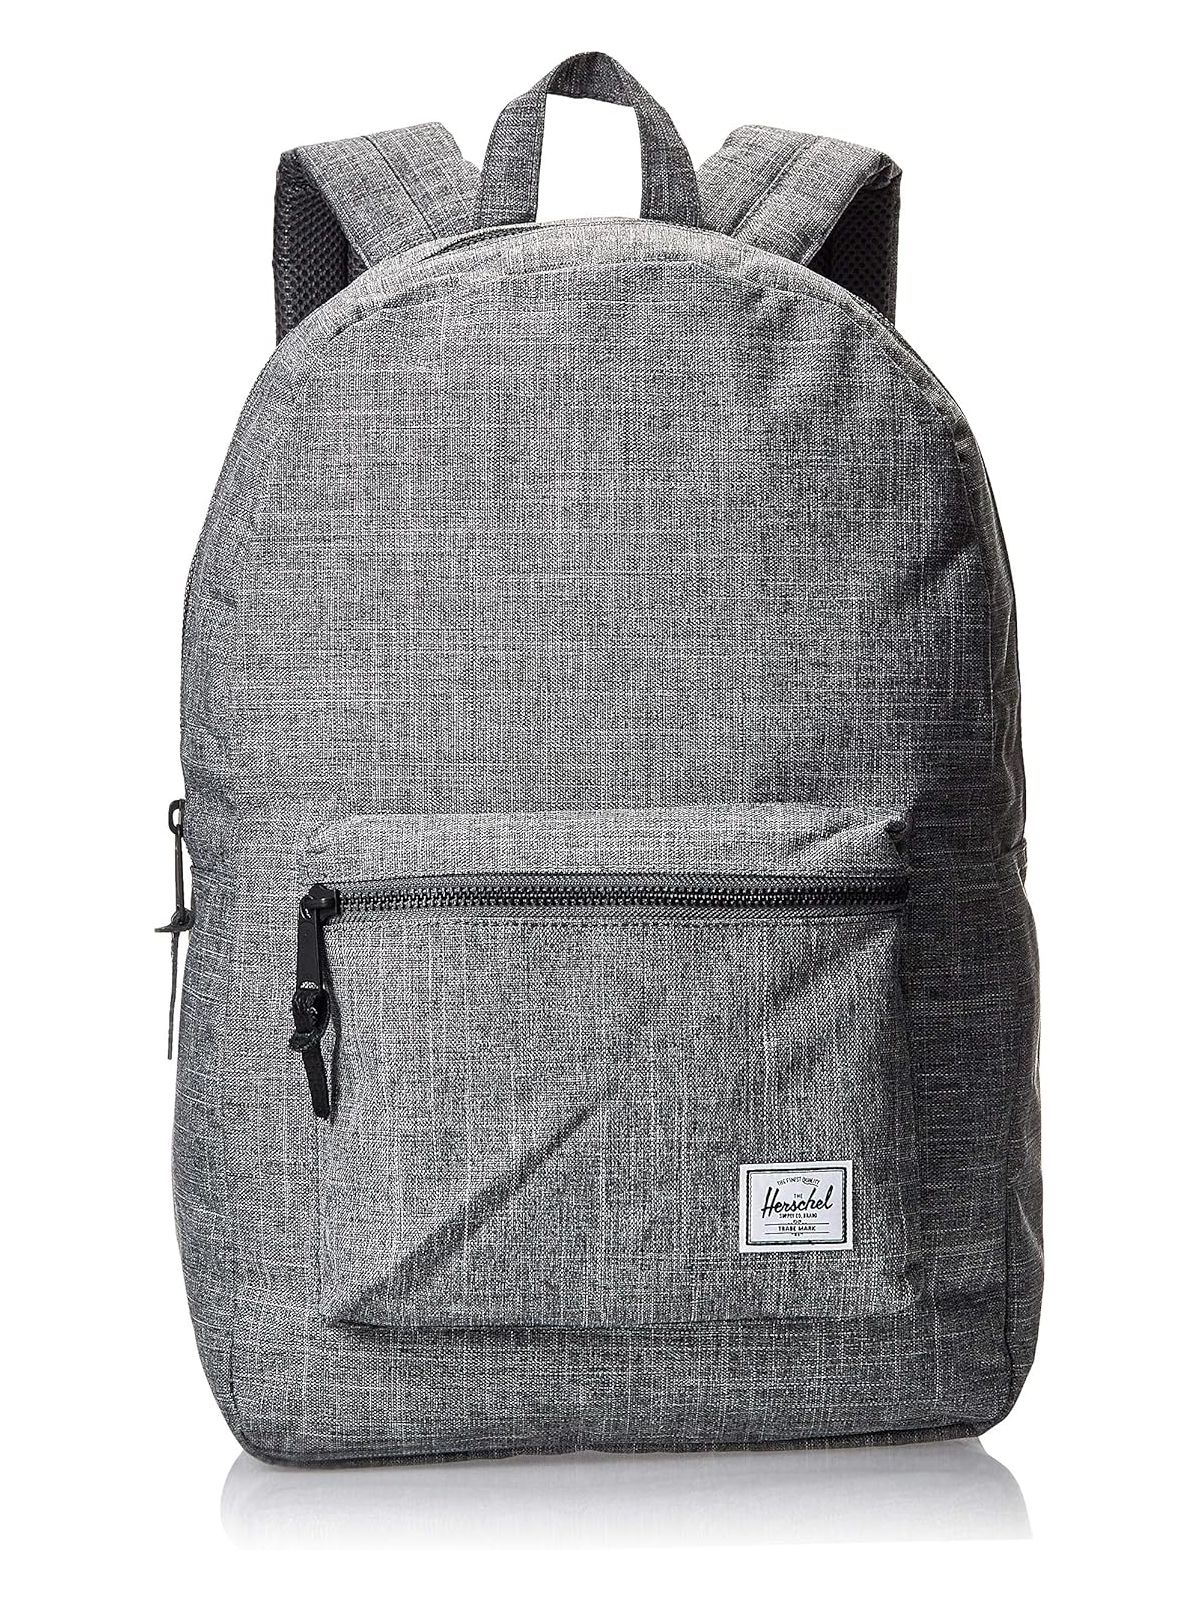 Рюкзак Herschel для женщин, серый, OS, EUR, 10005-00919-OS